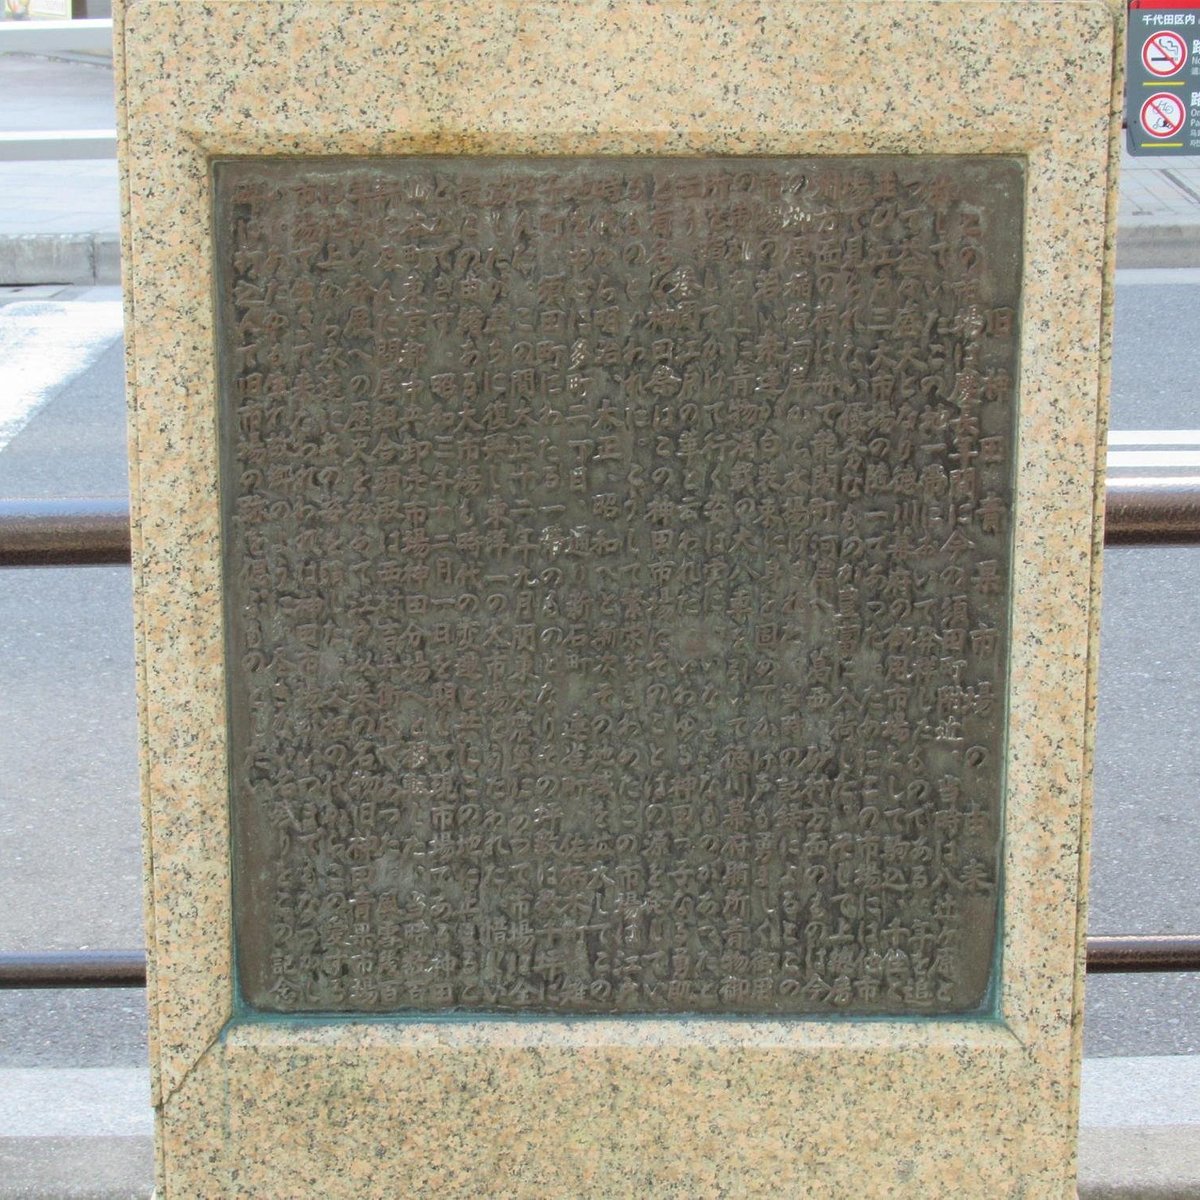 Kanda Seikaichiba Hassho No Chi Monument Chiyoda 2022 What To Know Before You Go 4443